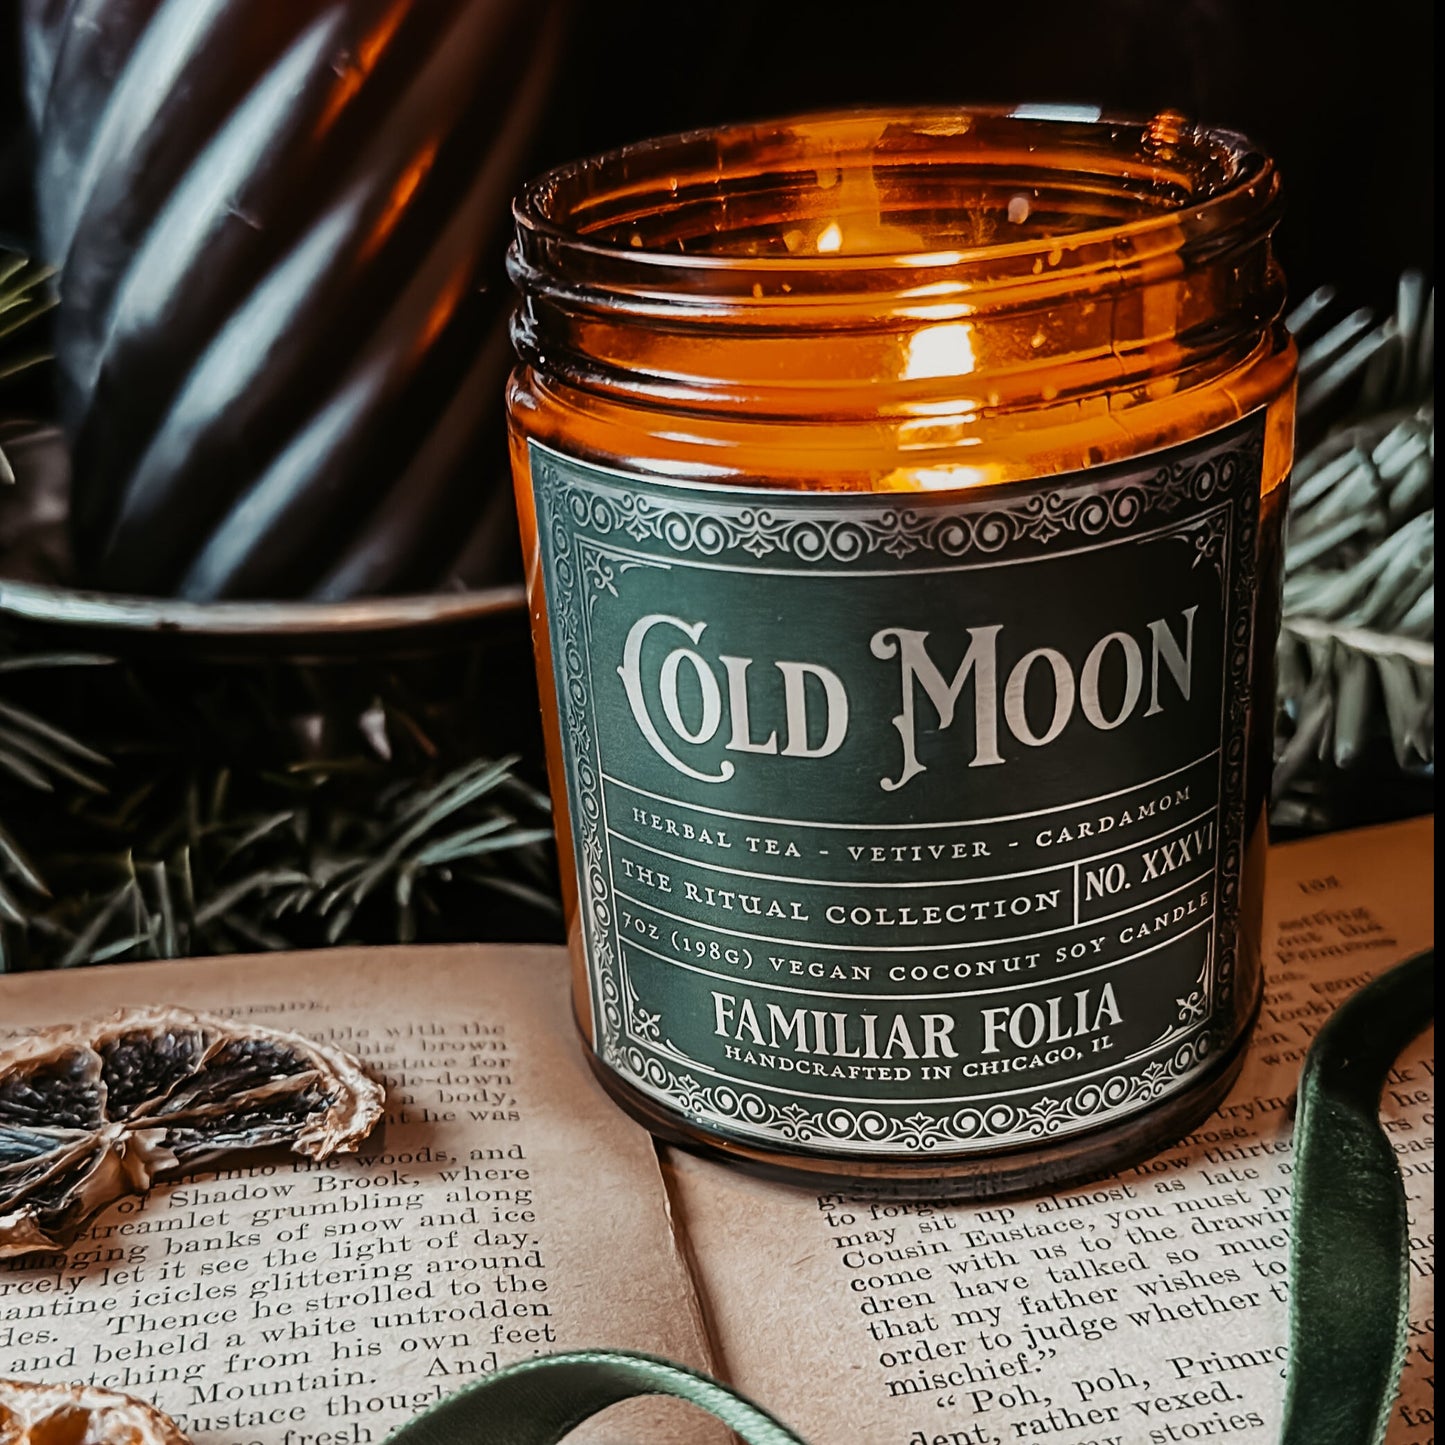 Cold Moon (Herbal Tea & Birch)